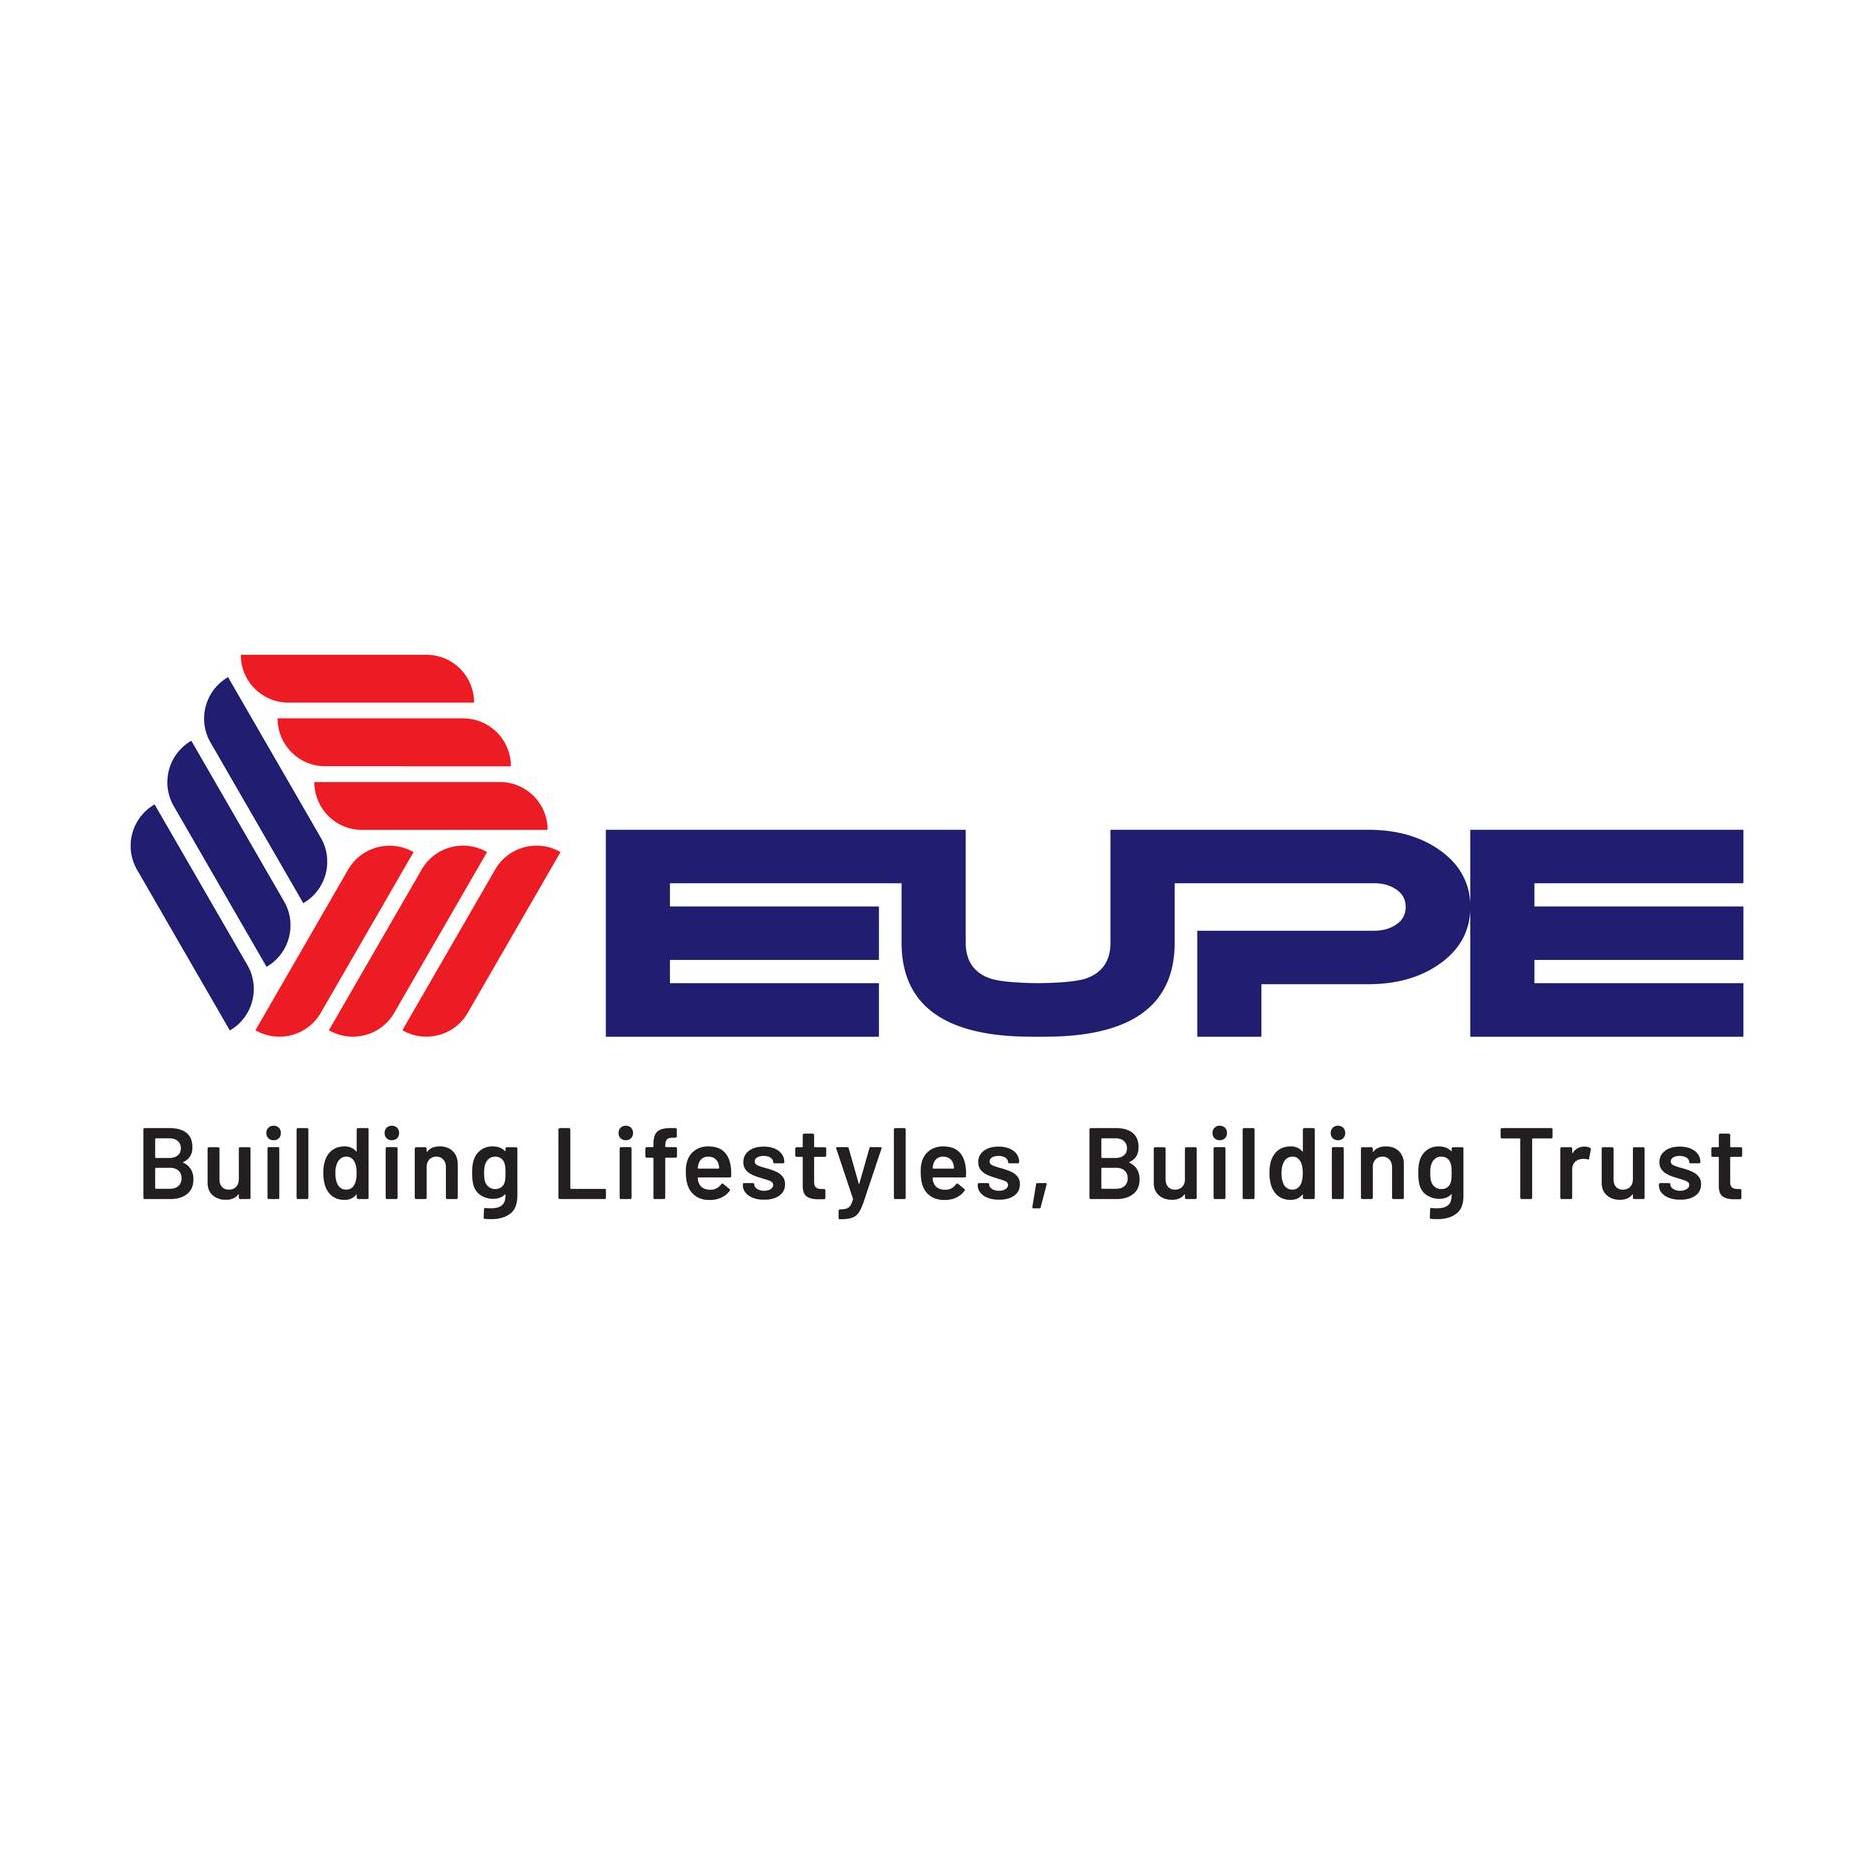 Eupe Corporation Berhad